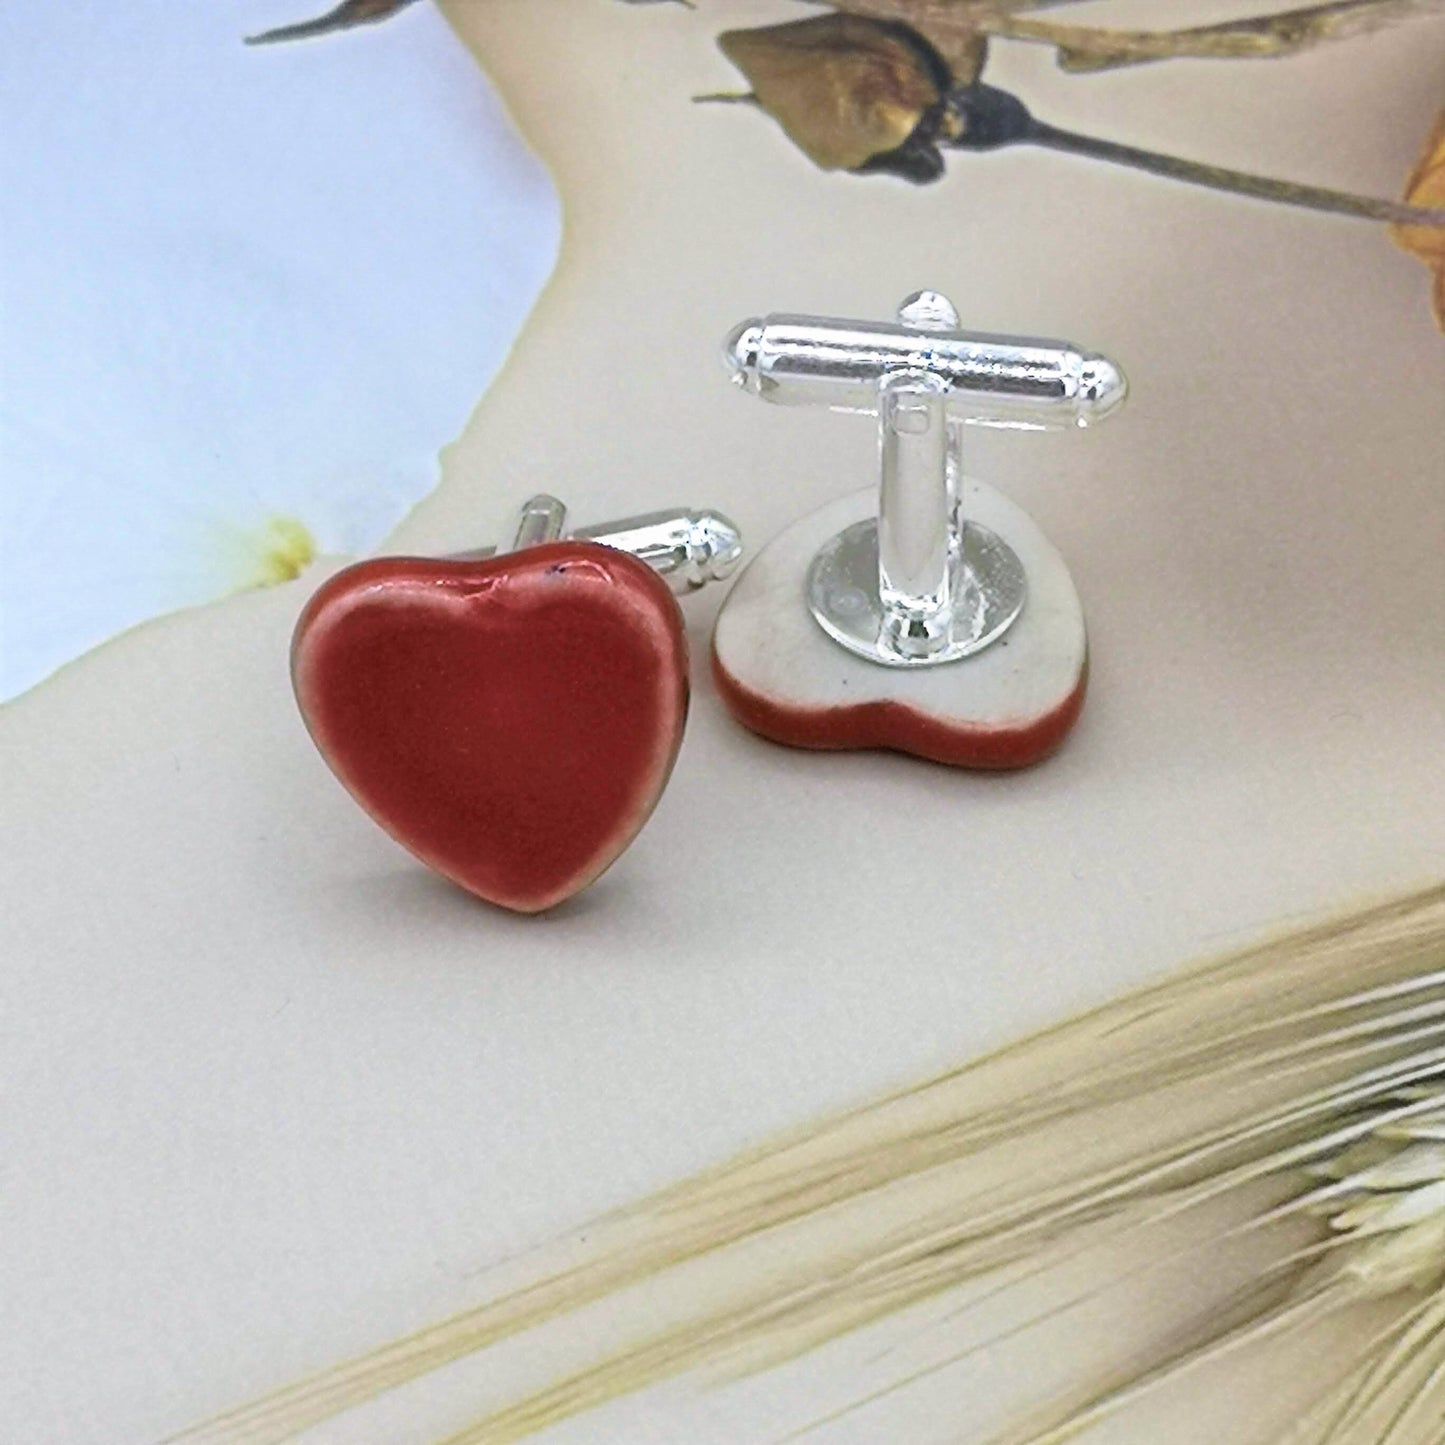 Red Heart CuffLinks For Men, Best Valentines Day Gifts For Him, 9th Wedding Anniversary Gift For Husband, Cute Boyfriend Birthday Gift - Ceramica Ana Rafael